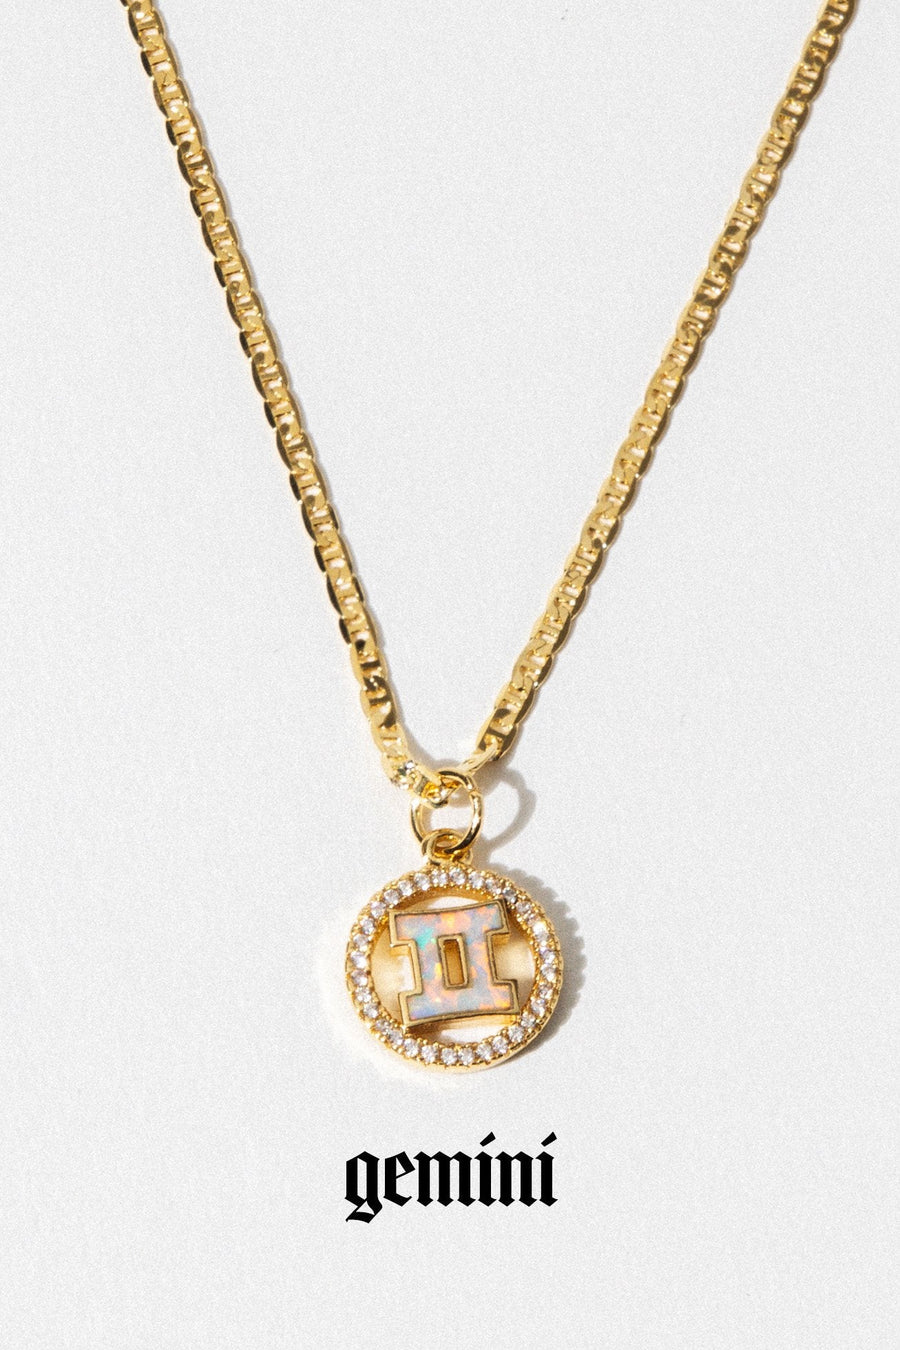 Dona Italia Jewelry Gemini / Gold / 18 Inches Cosmic Opal Zodiac Necklace